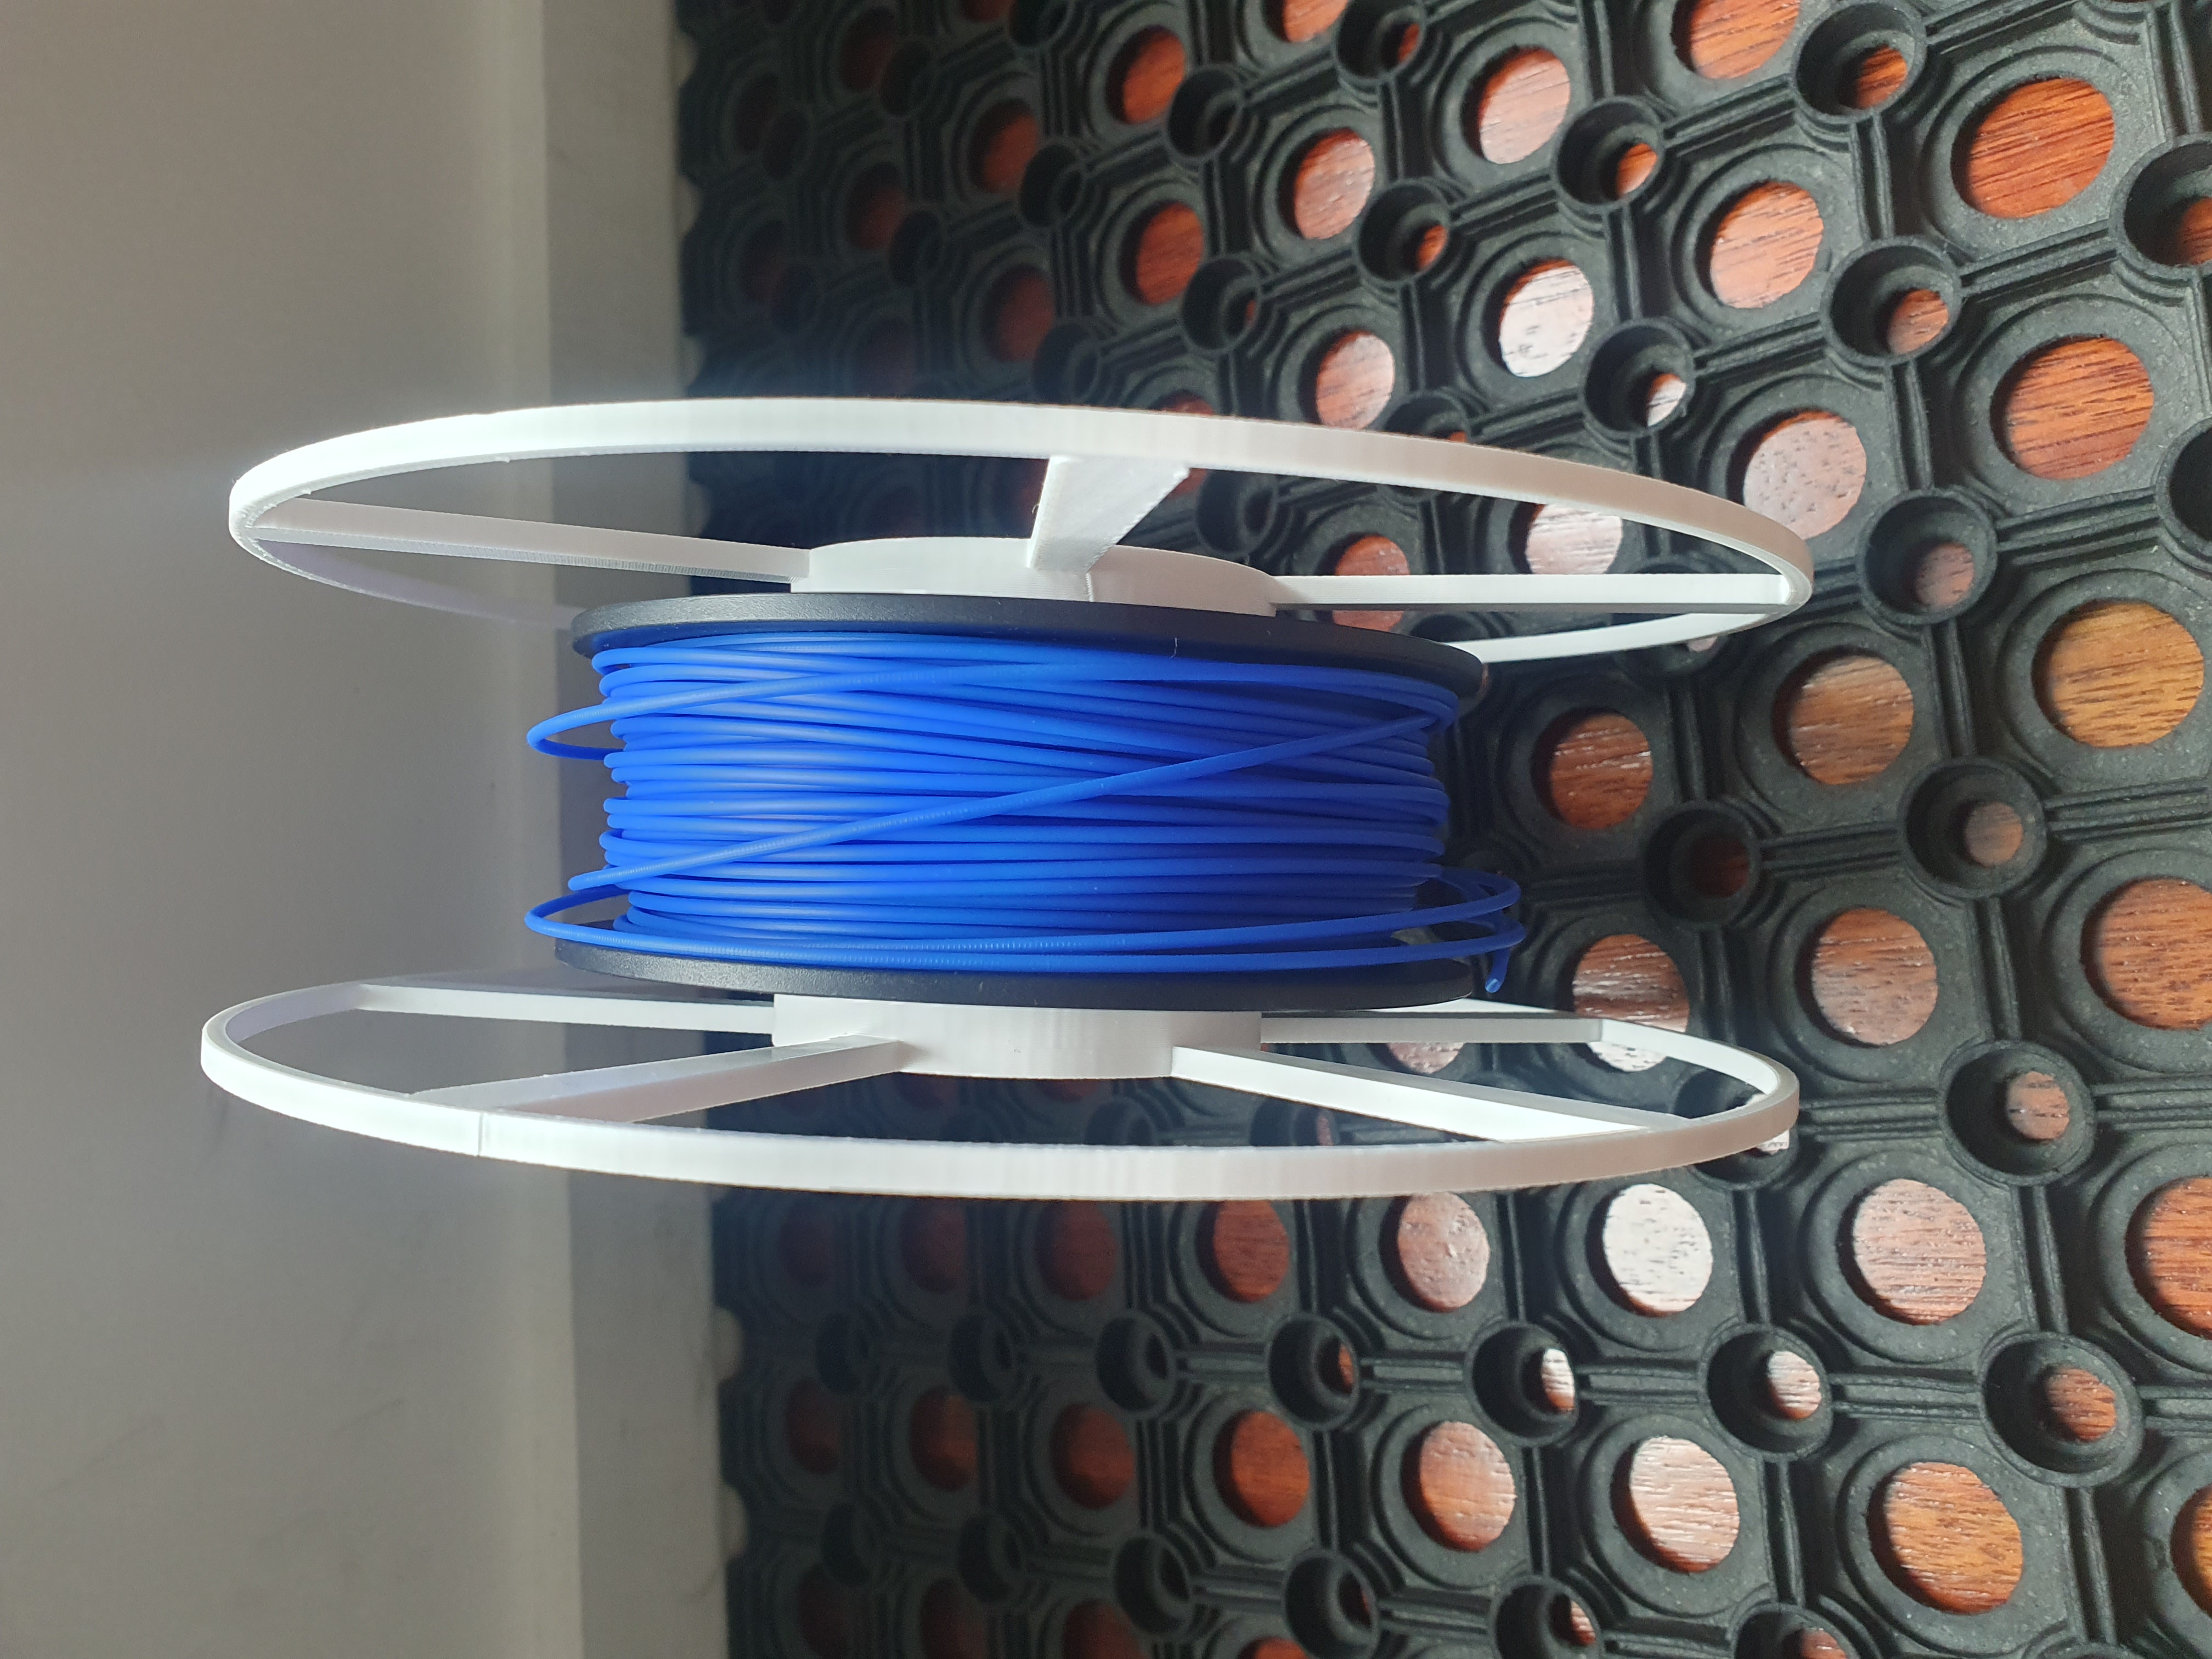 Anyone used Sunlu filament in the AMS? : r/BambuLab